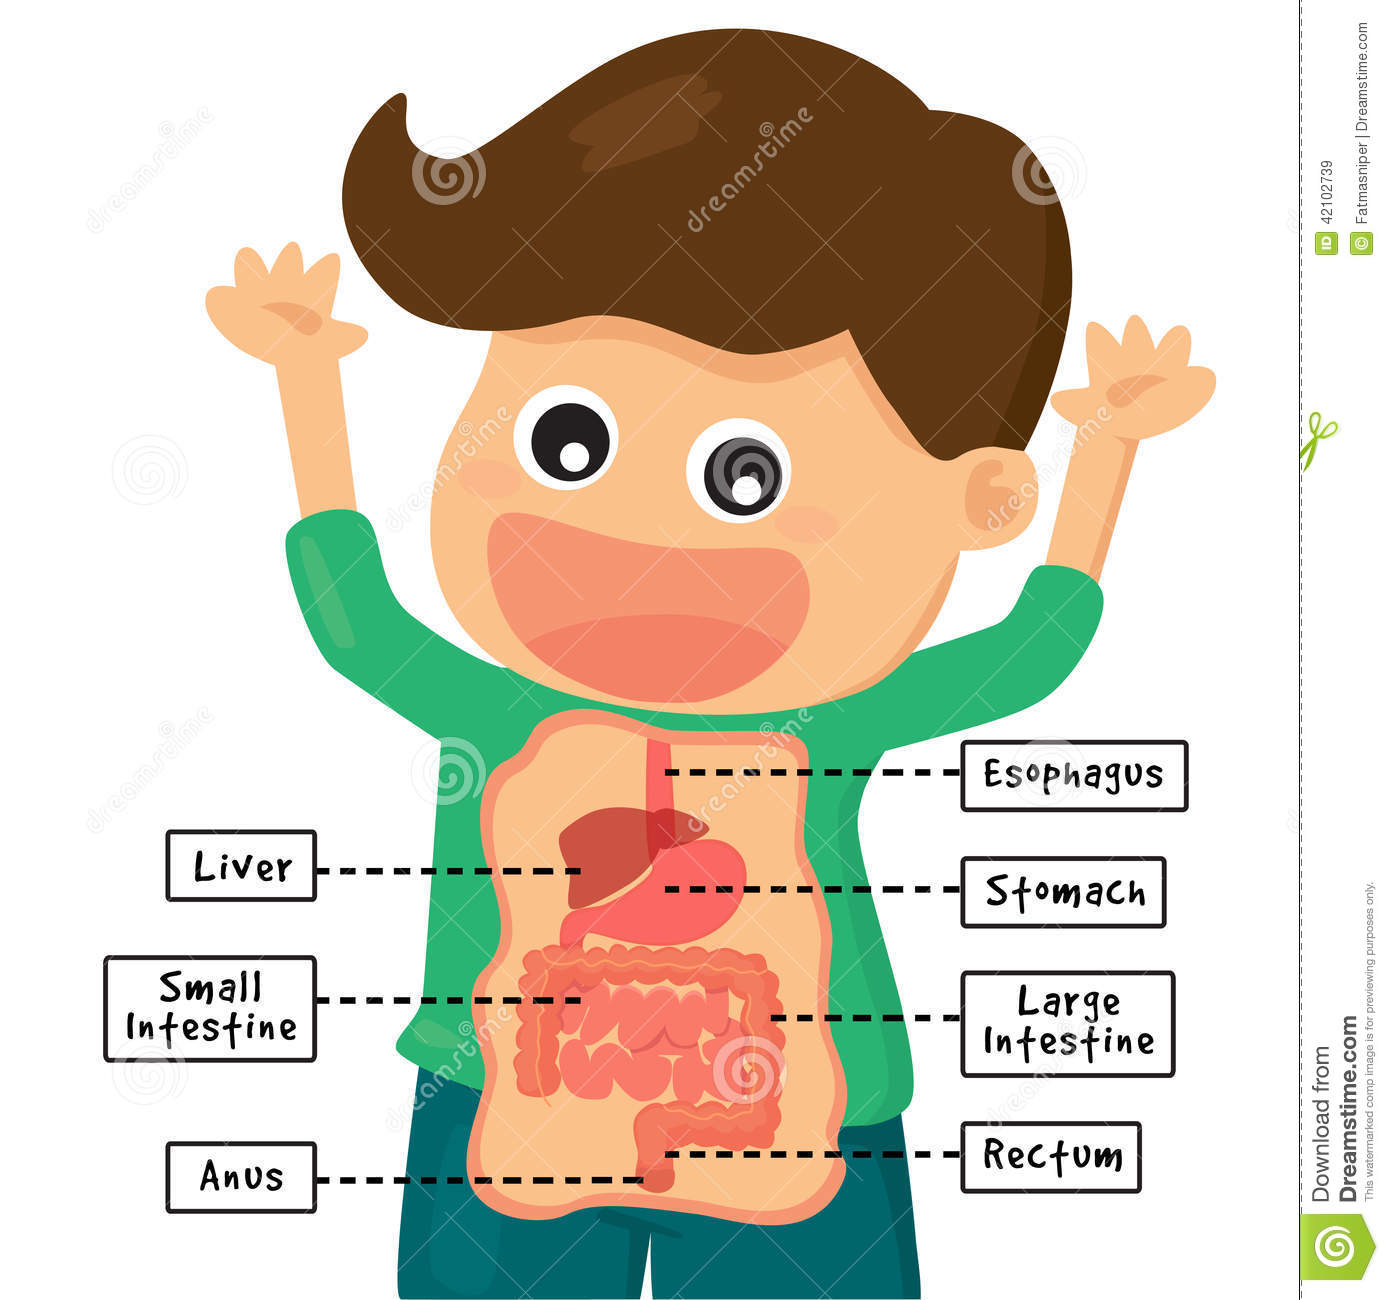 Child digestive system